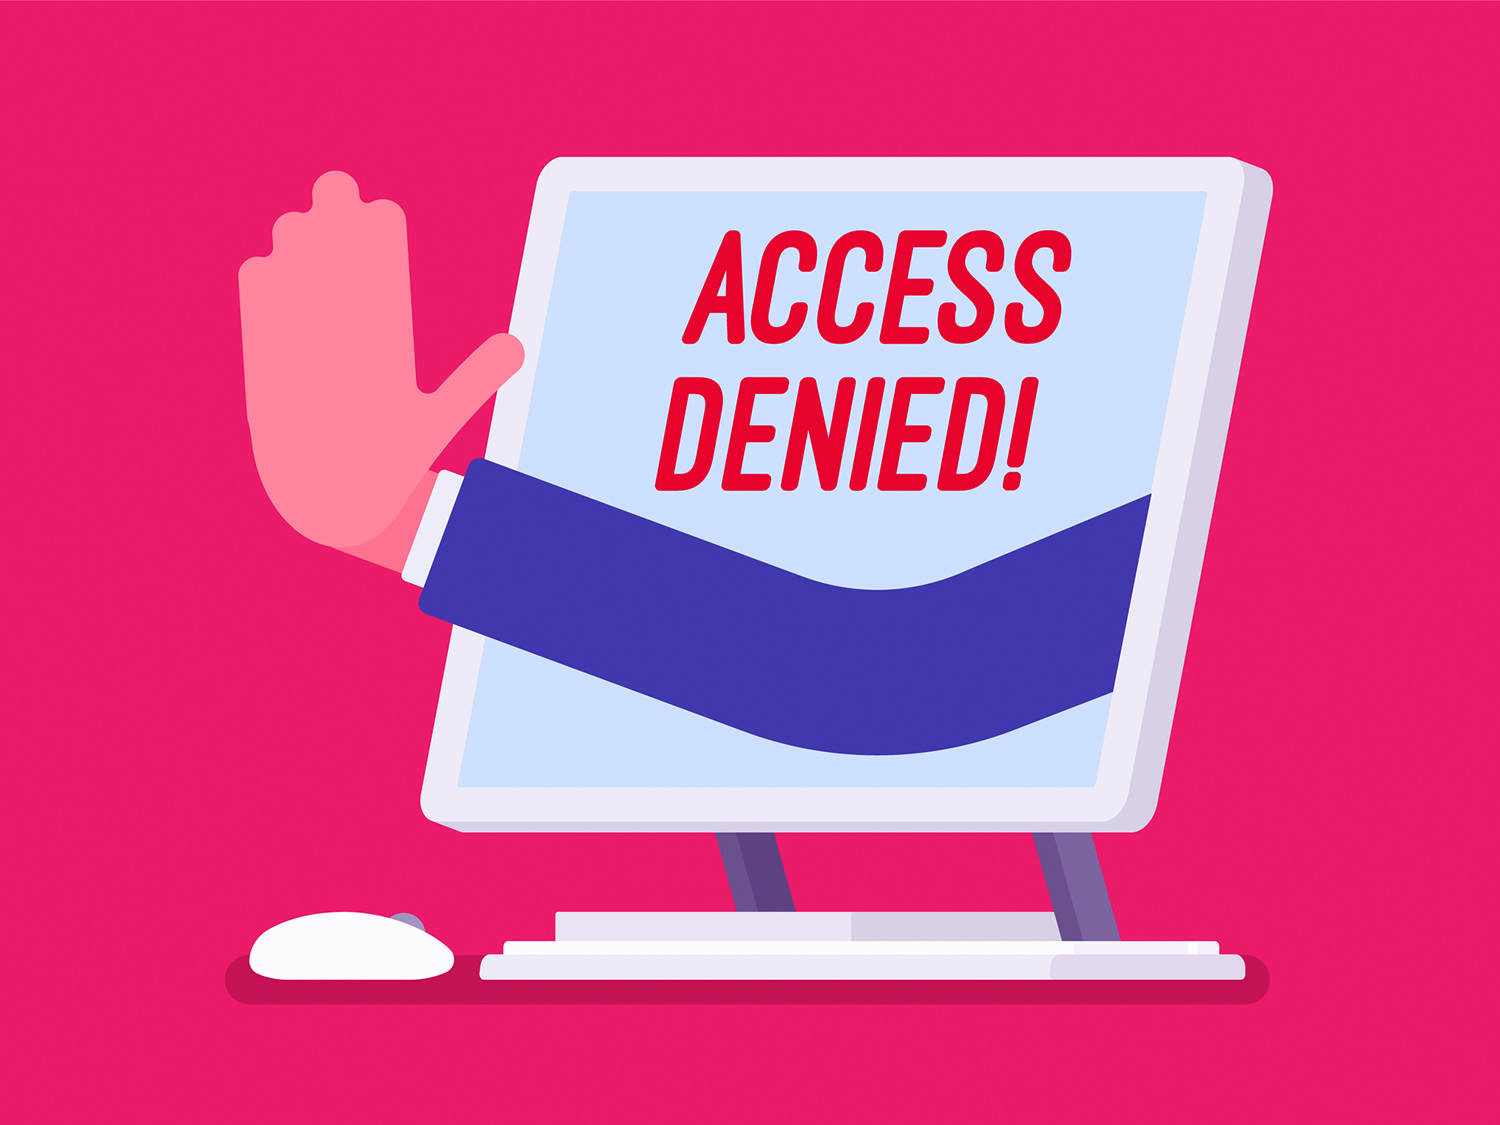 Pull access denied for. Access denied клипарт. Monoblock vector.